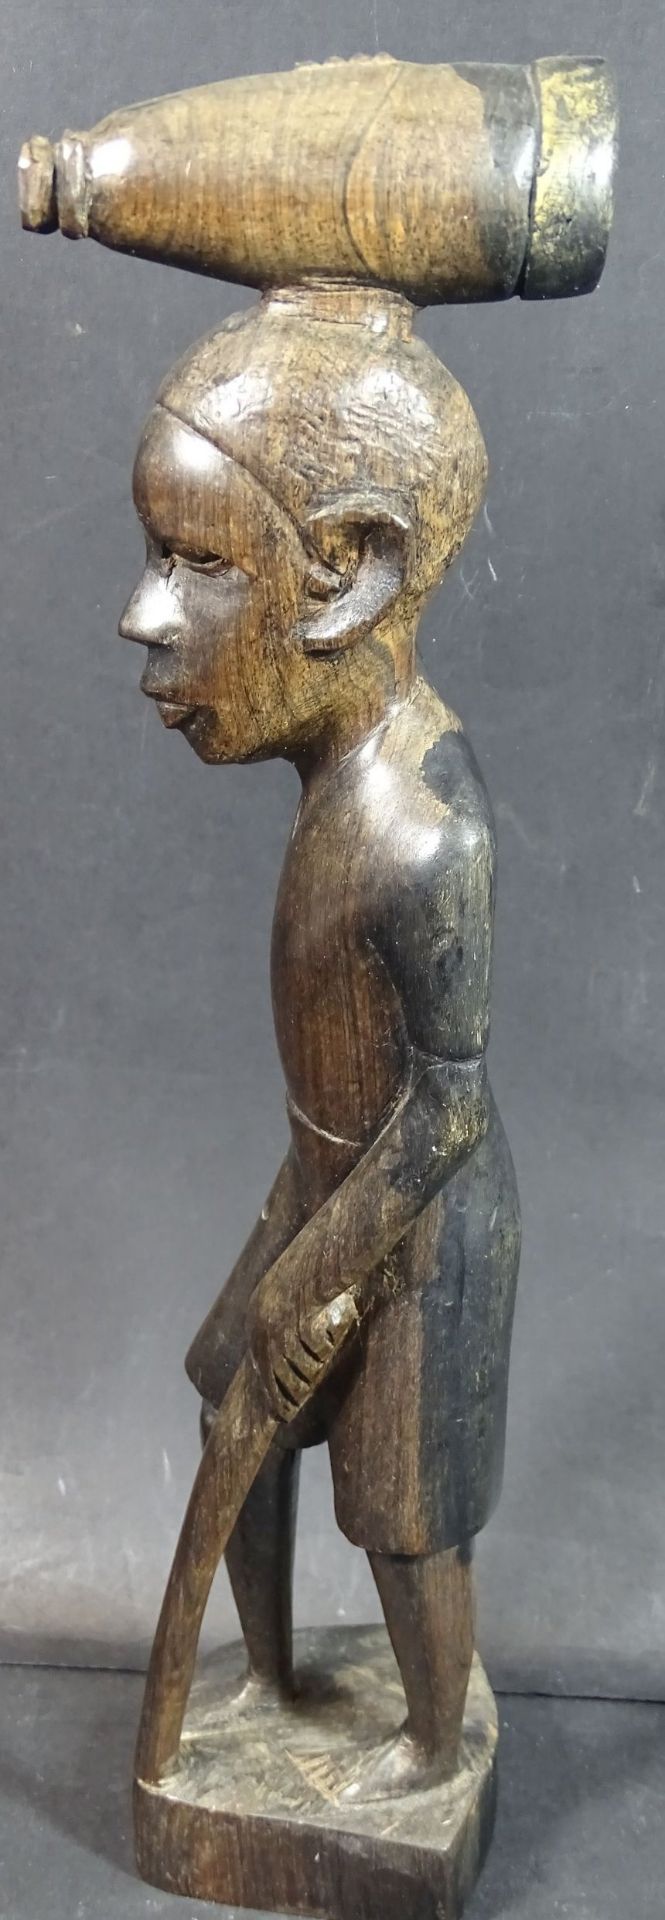 Hozschnitzerei, afrikan. Frau mit Kopflast, h-30 cm - Bild 2 aus 5